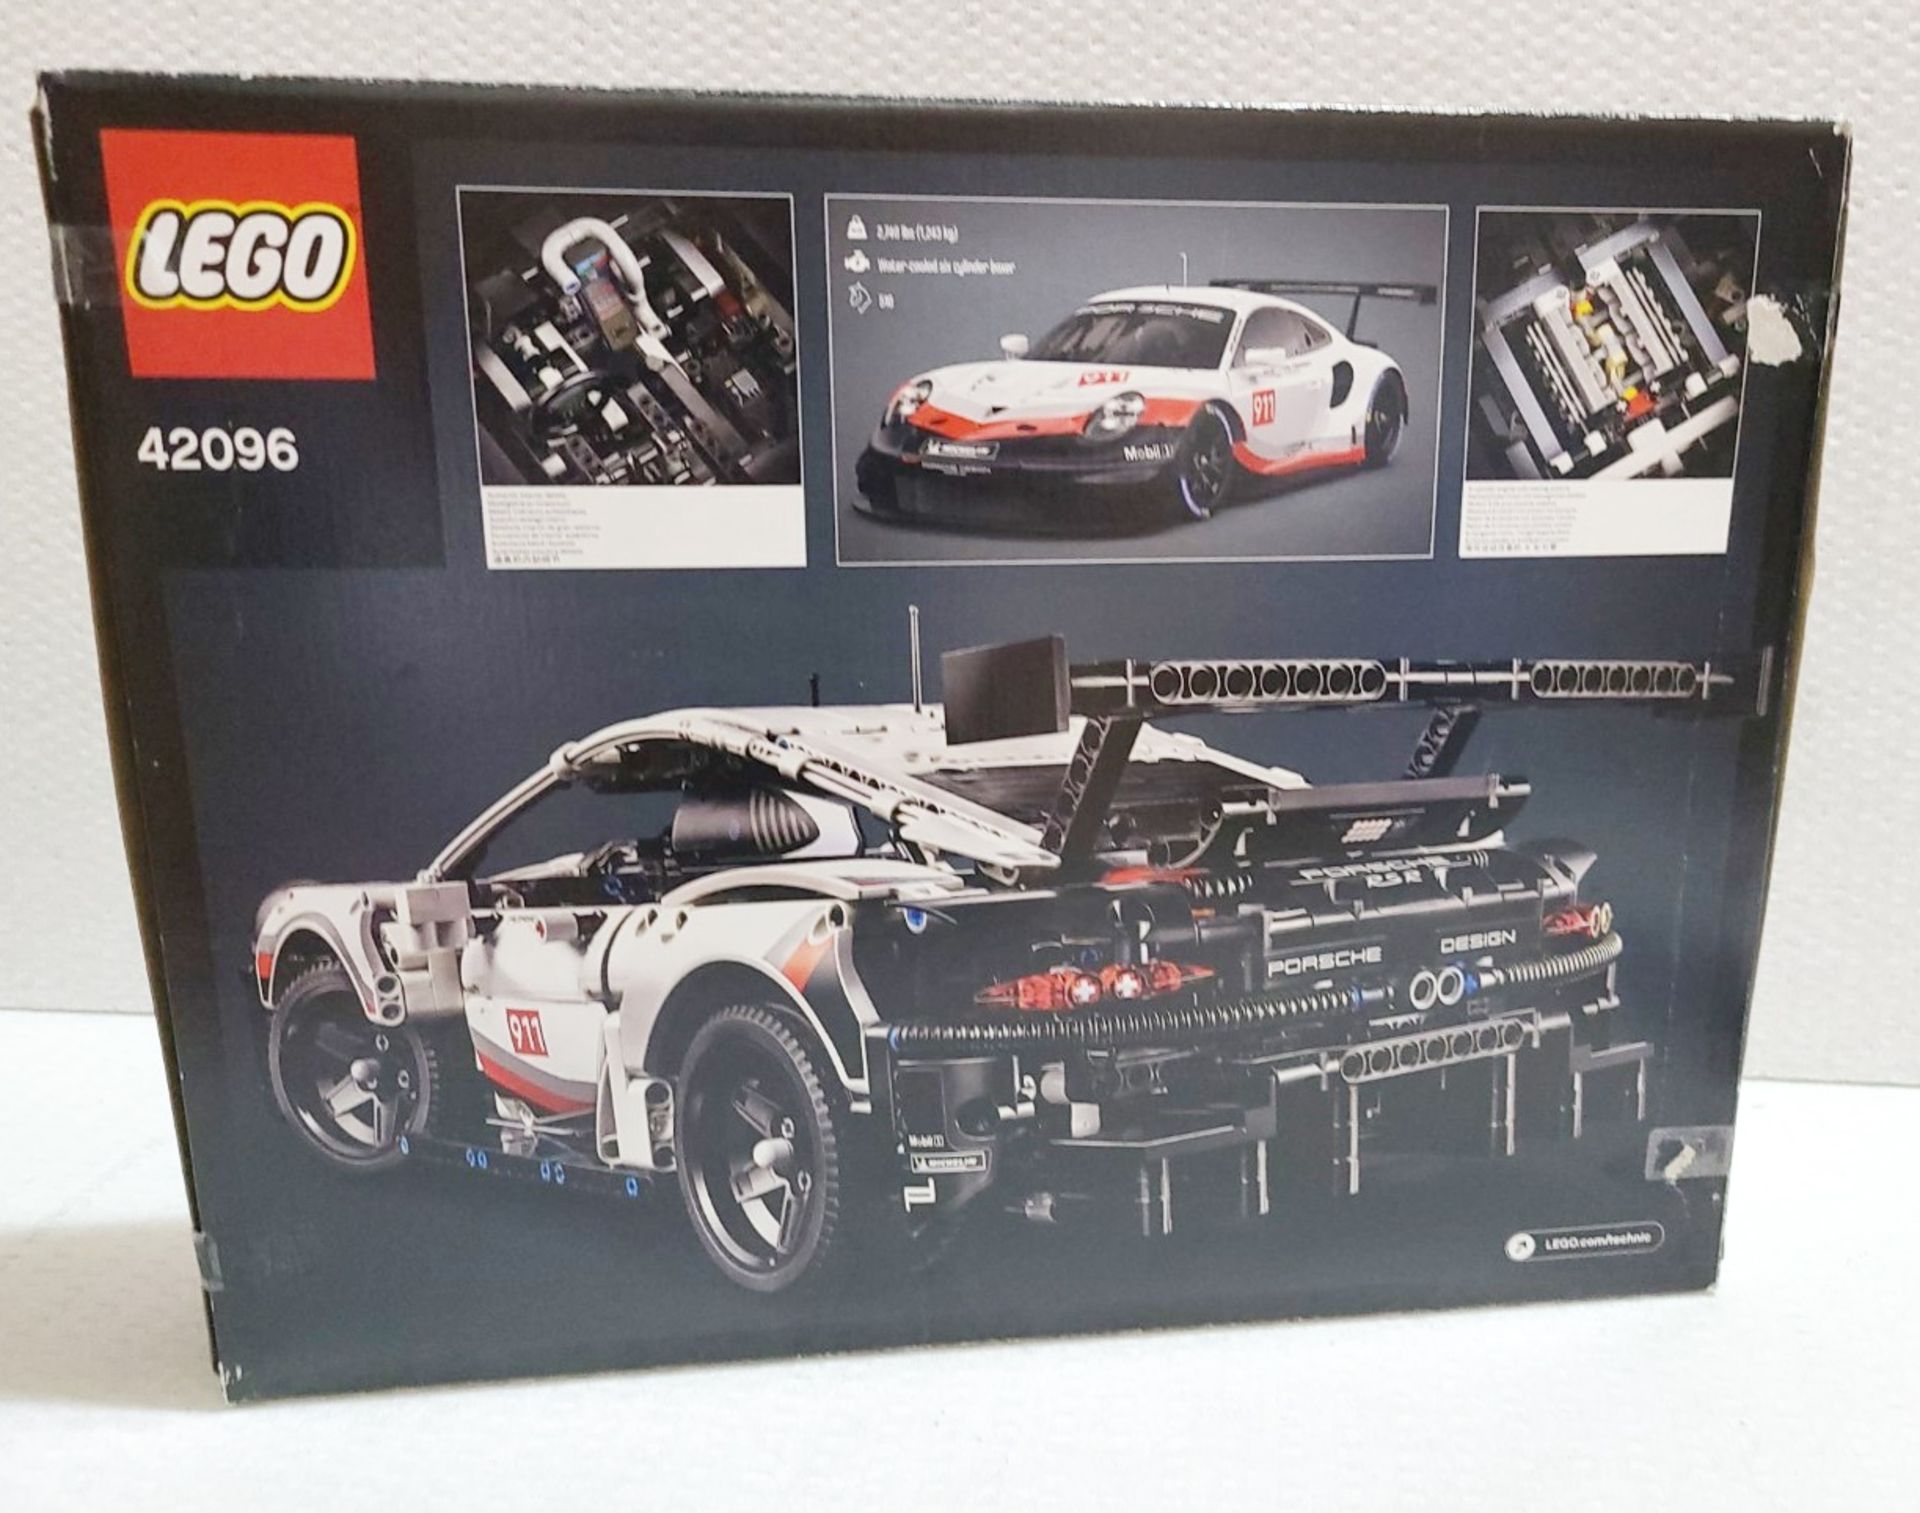 1 x LEGO Technic Porsche 911 RSR Sports Car Set - Original Price £169.99 - Image 4 of 6